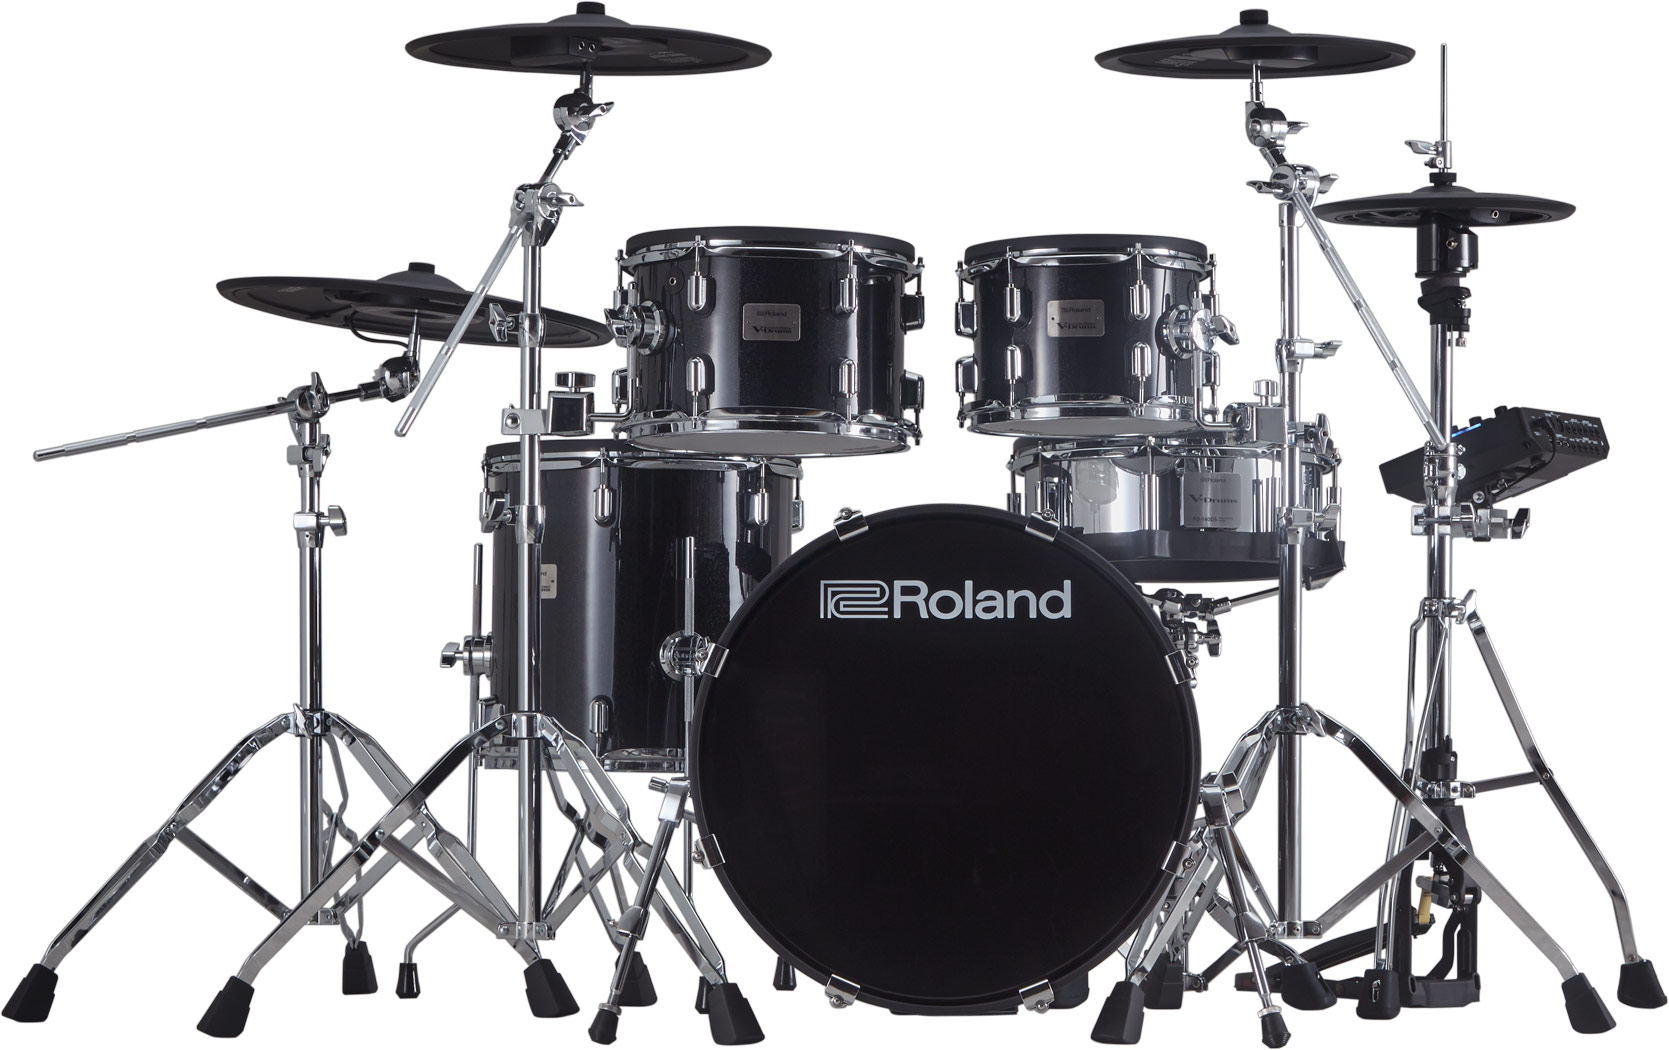 Roland VAD506 drumkit